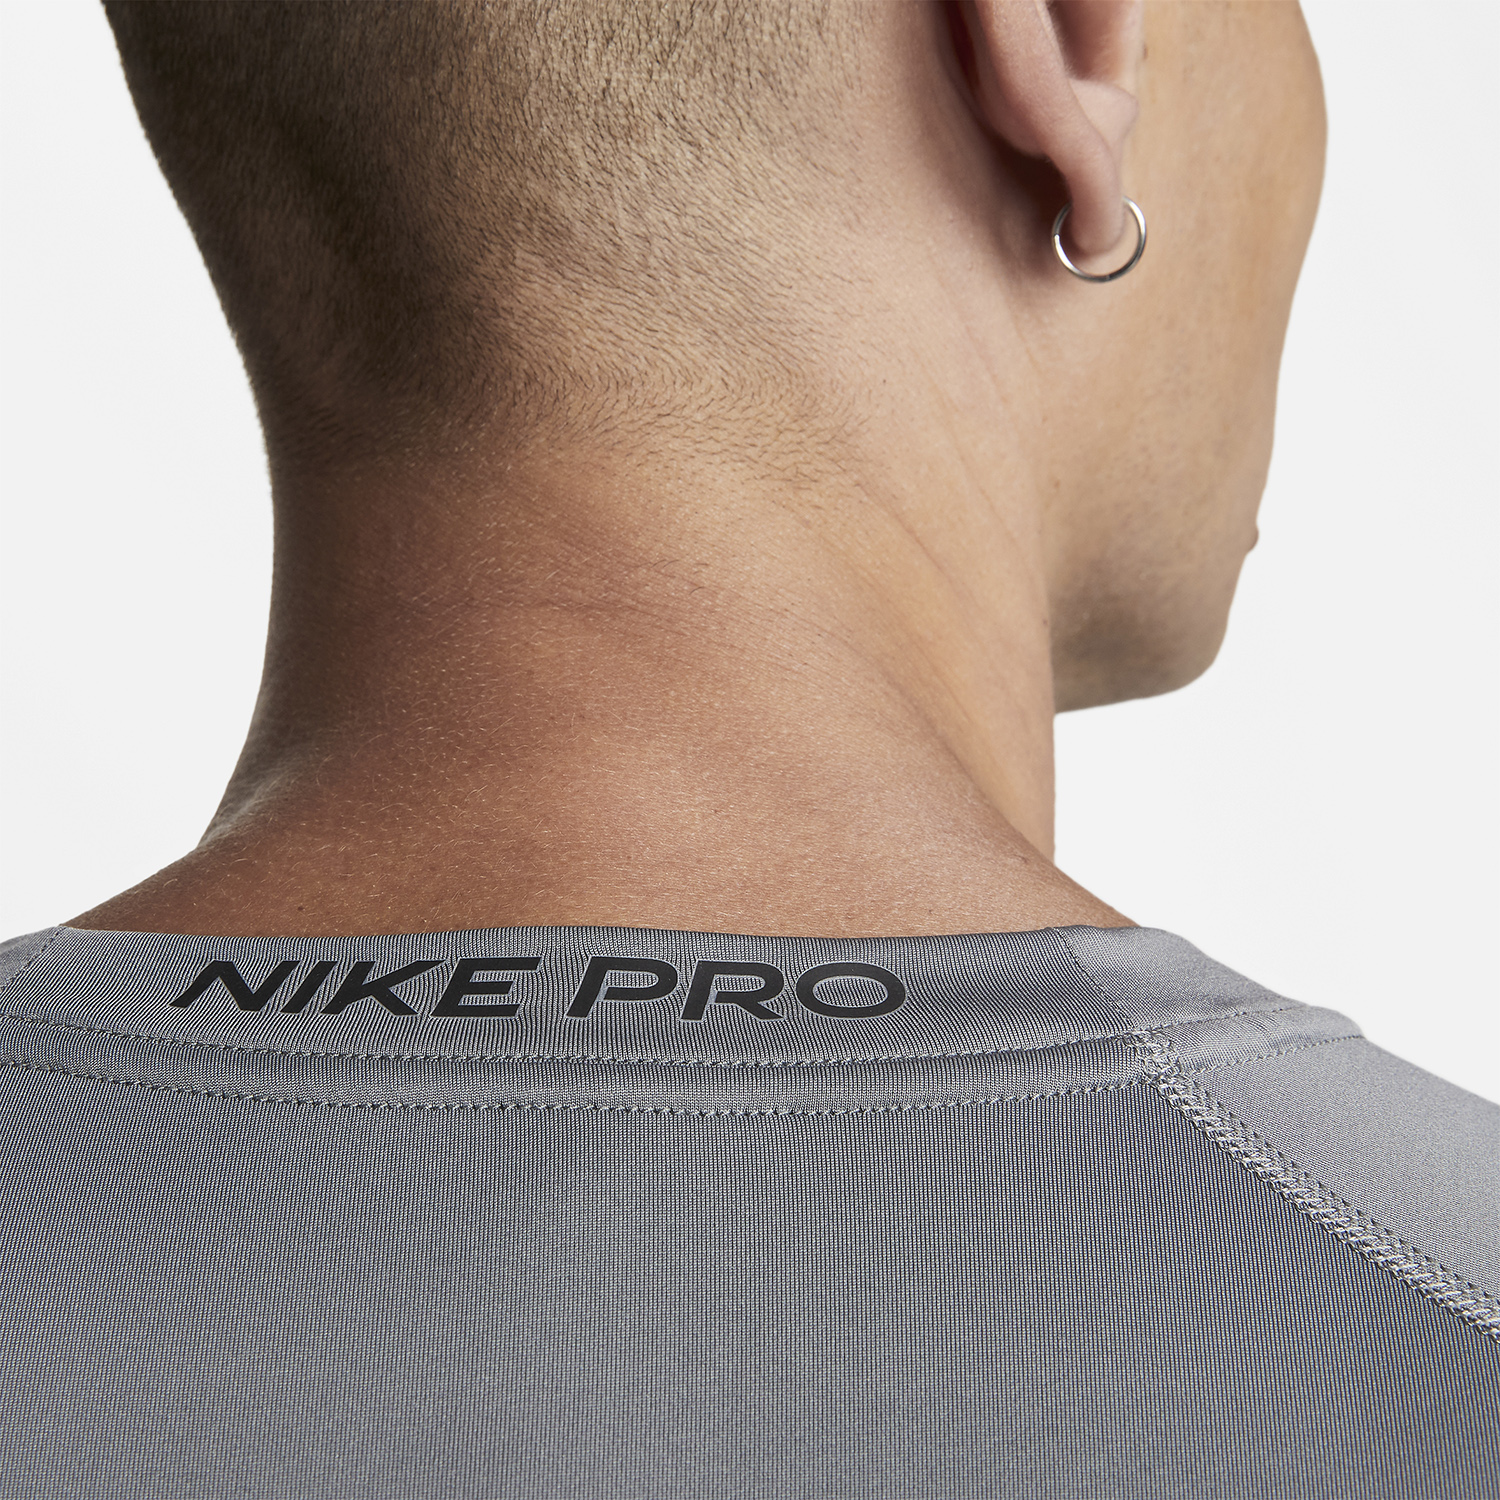 Nike Dri-FIT Logo T-Shirt - Smoke Grey/Black